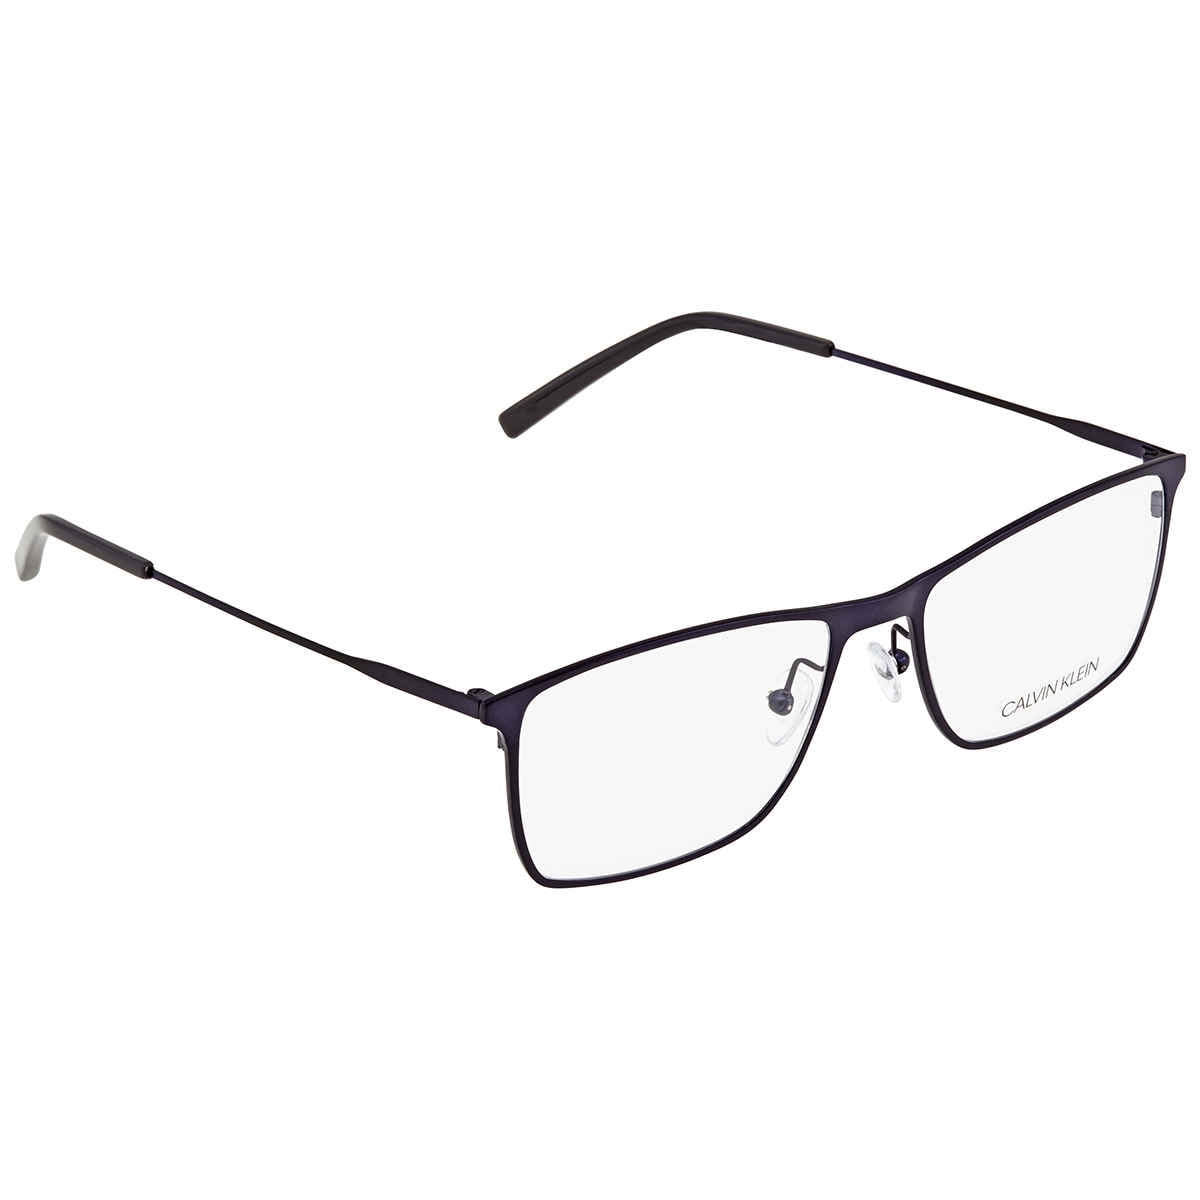 Calvin Klein Men's Blue Square Eyeglass Frames CK5468 412 55 